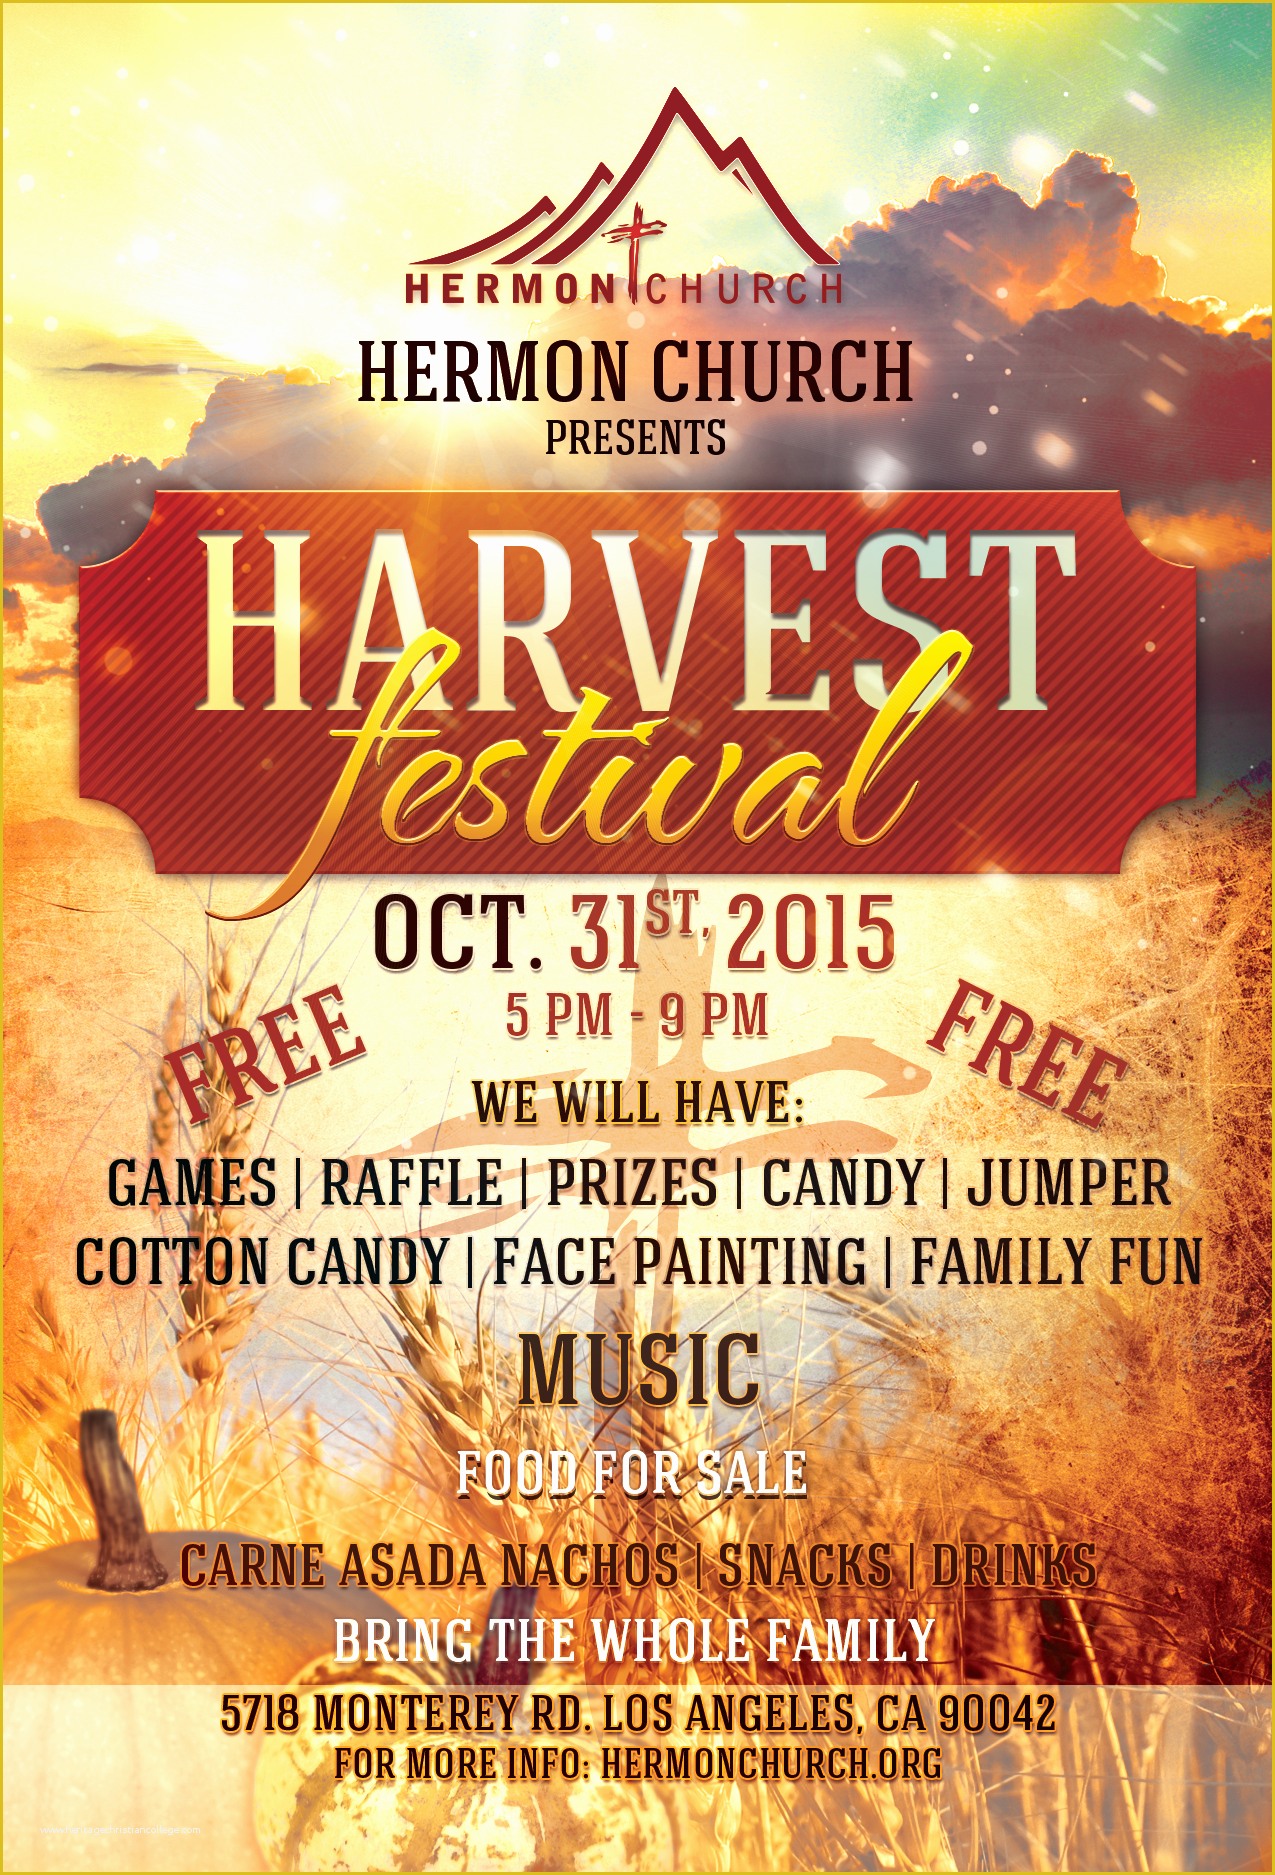 Harvest Festival Flyer Free Template Of Related Keywords & Suggestions for Harvest Festival Flyer